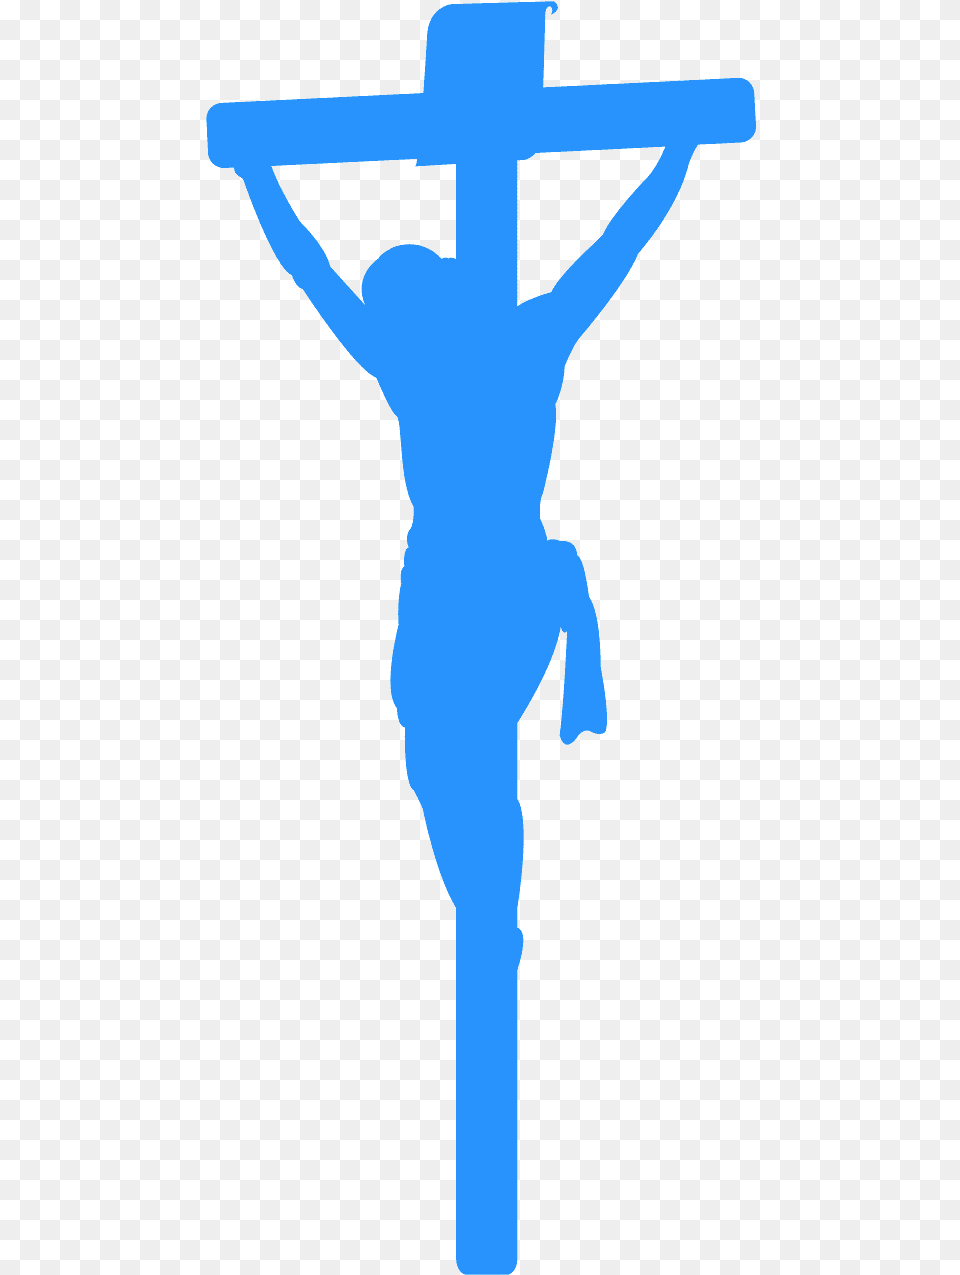 Jesus En La Cruz Silueta, Cross, Symbol, Crucifix, Person Png Image